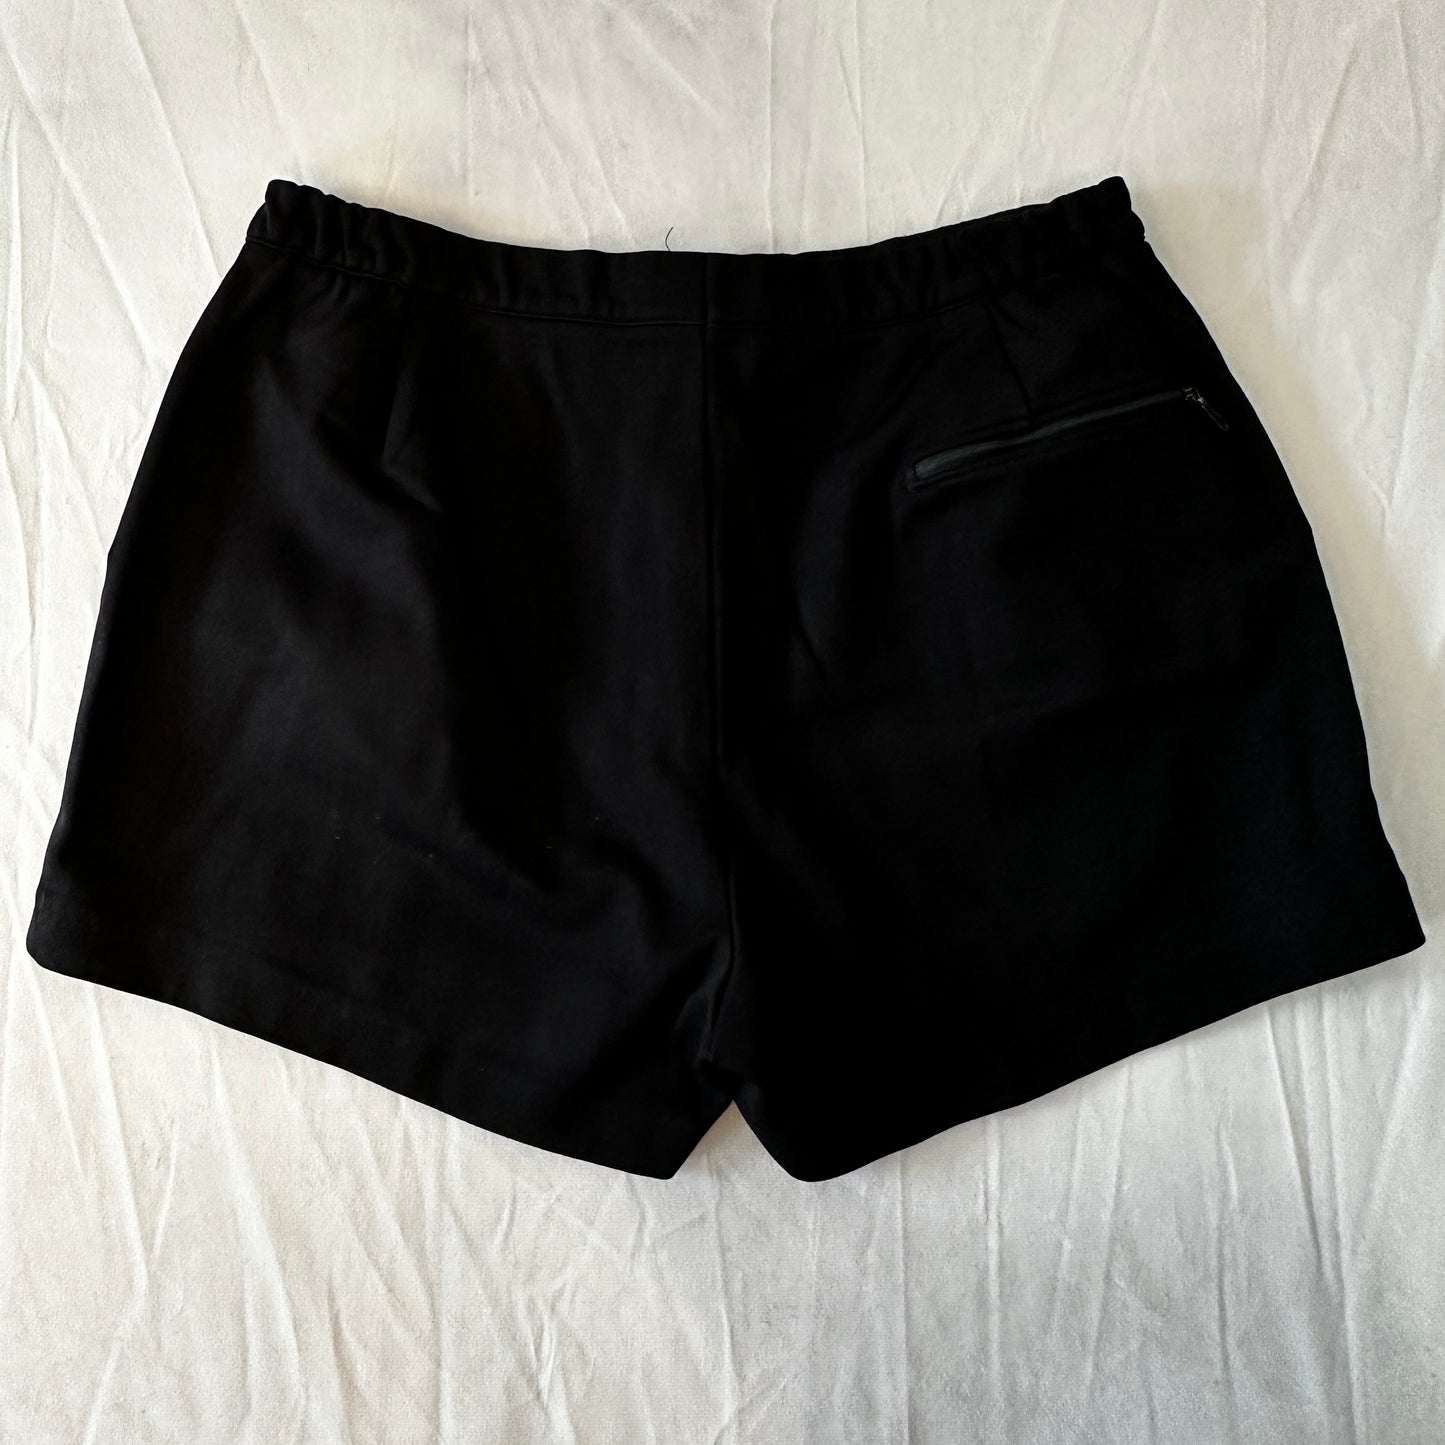 Erima Vintage Tennis Shorts - 54